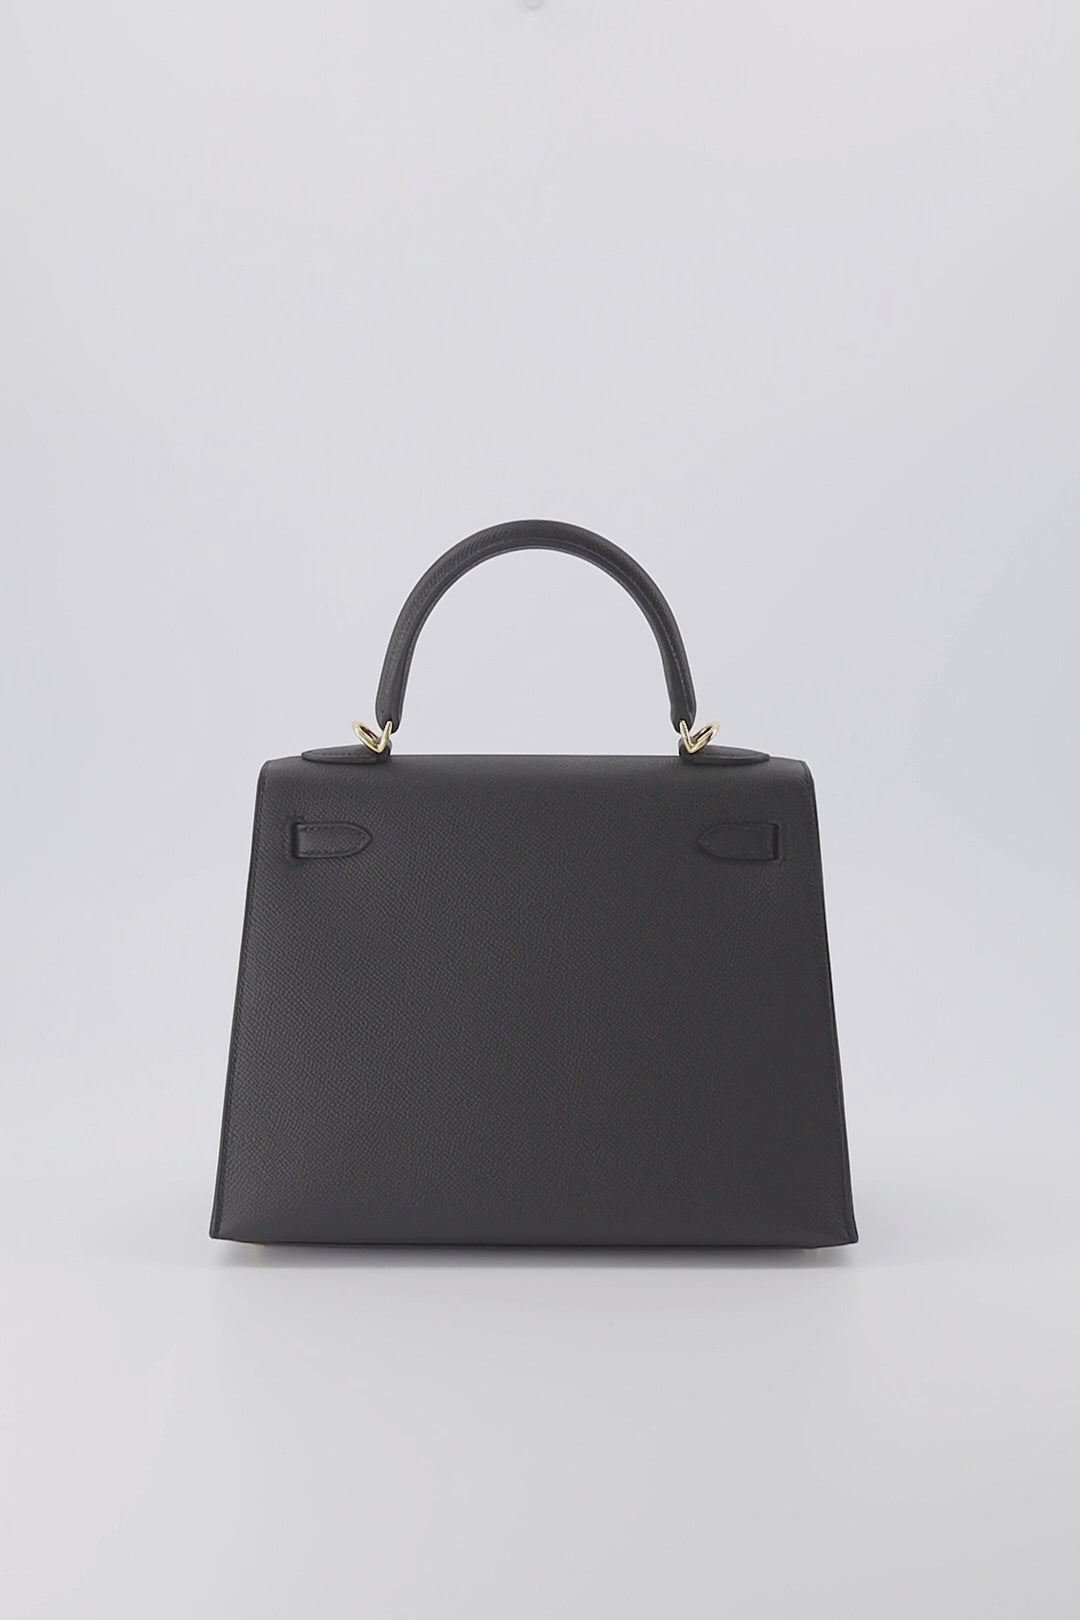 Hermès Kelly 25 Epsom Black | SACLÀB